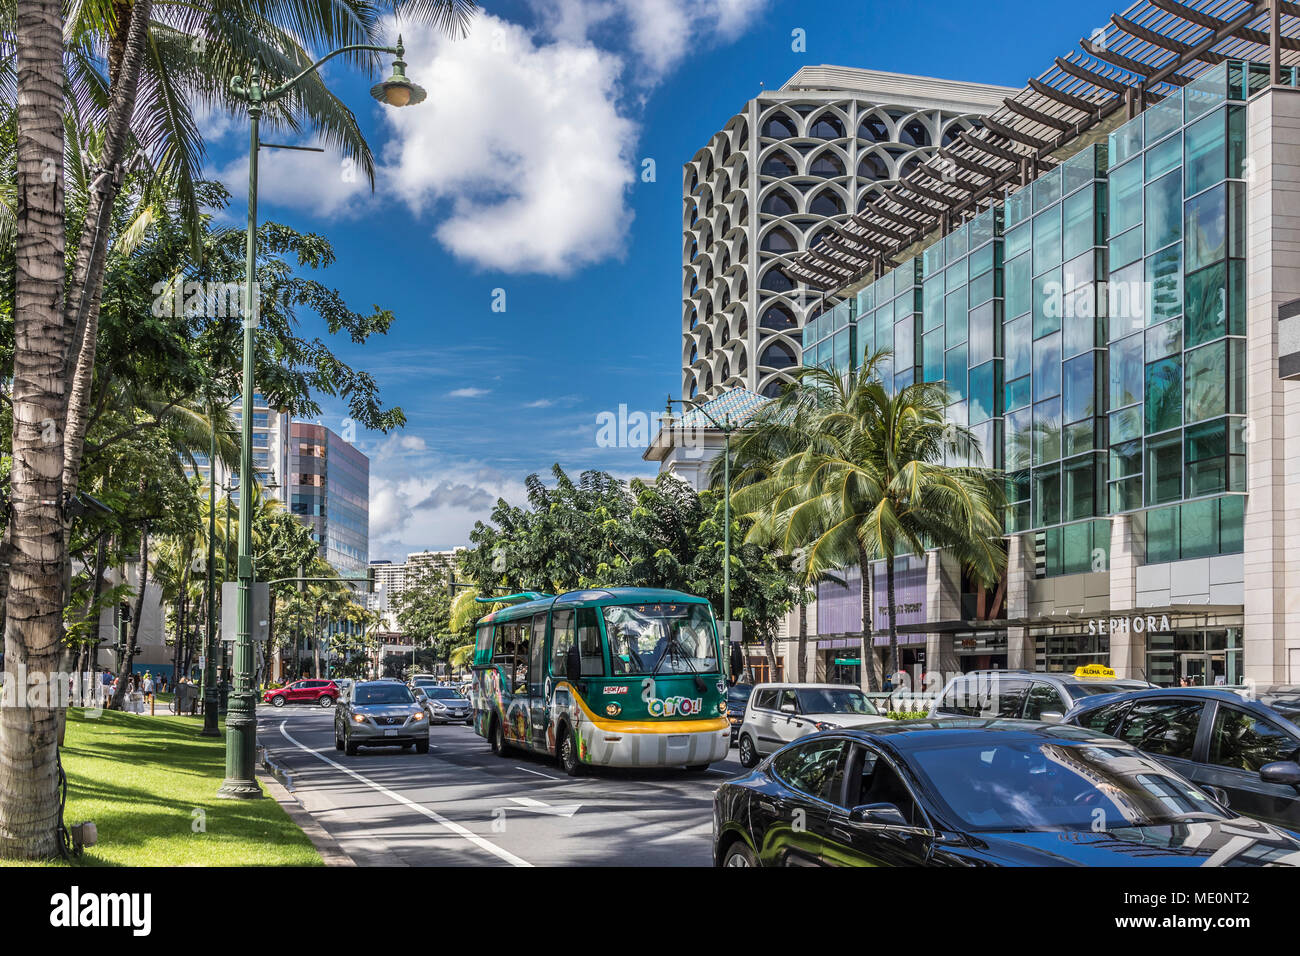 Looking towards the West along Kalakaua Avenue in Waikiki; Honolulu, Oahu, Hawaii, United States of America Stock Photo